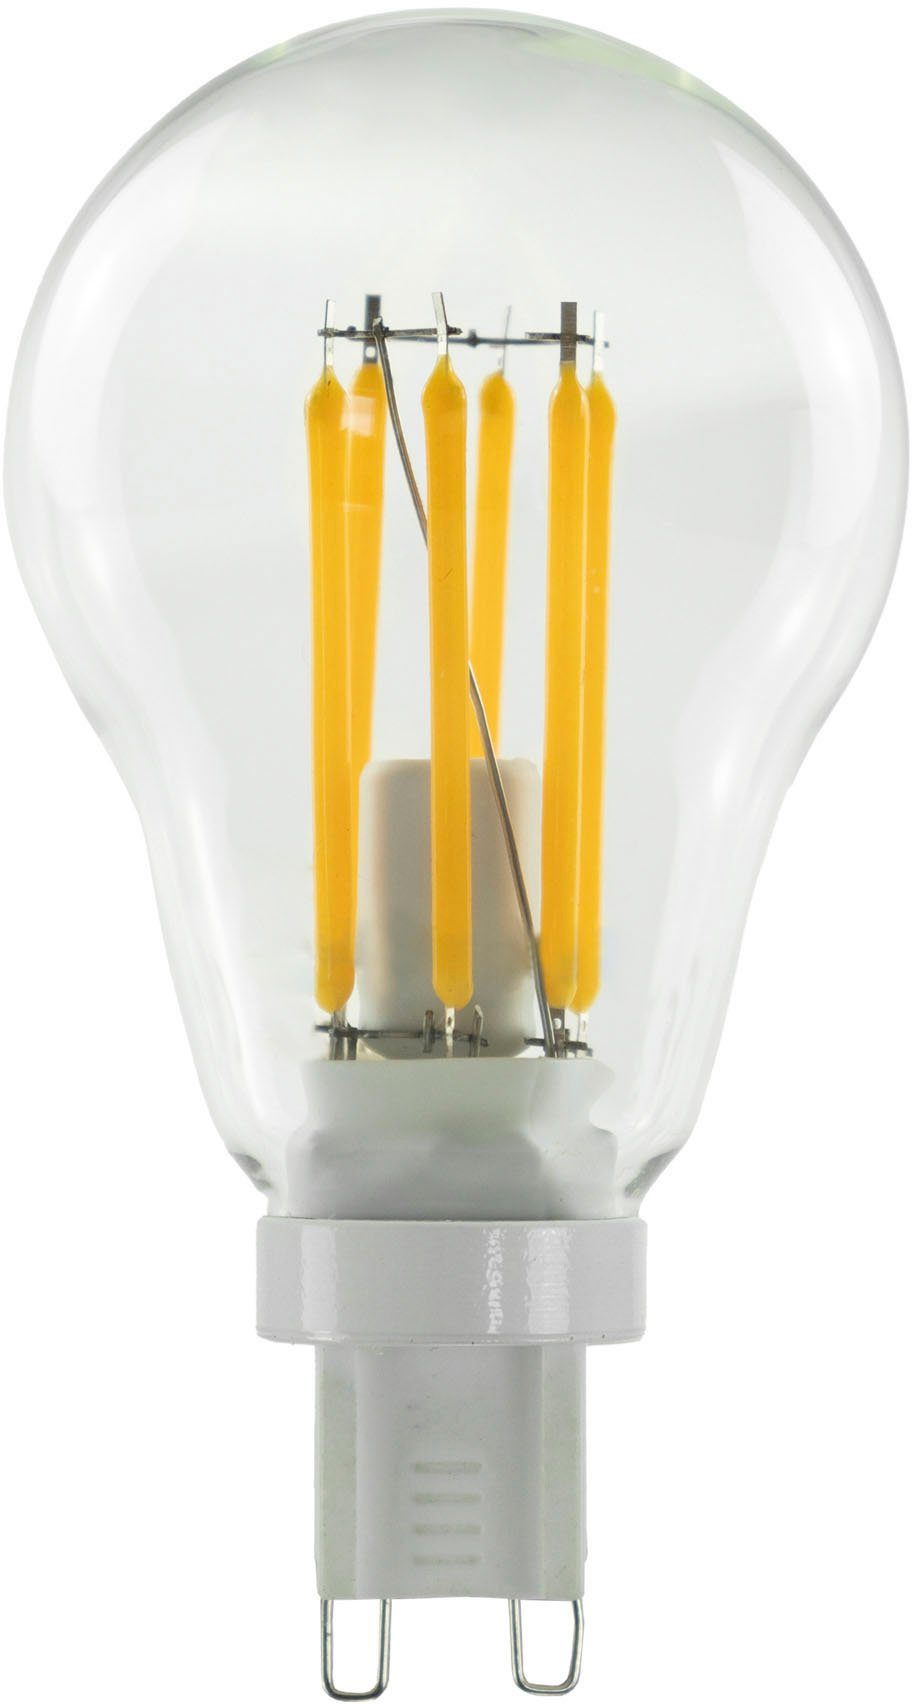 SEGULA LED-Leuchtmittel LED Glühlampe A15 - G9, G9, 1 St., Warmweiß, LED Glühlampe A15 - G9, 2700K, klar, 3,2W, CRI 90, dimmbar